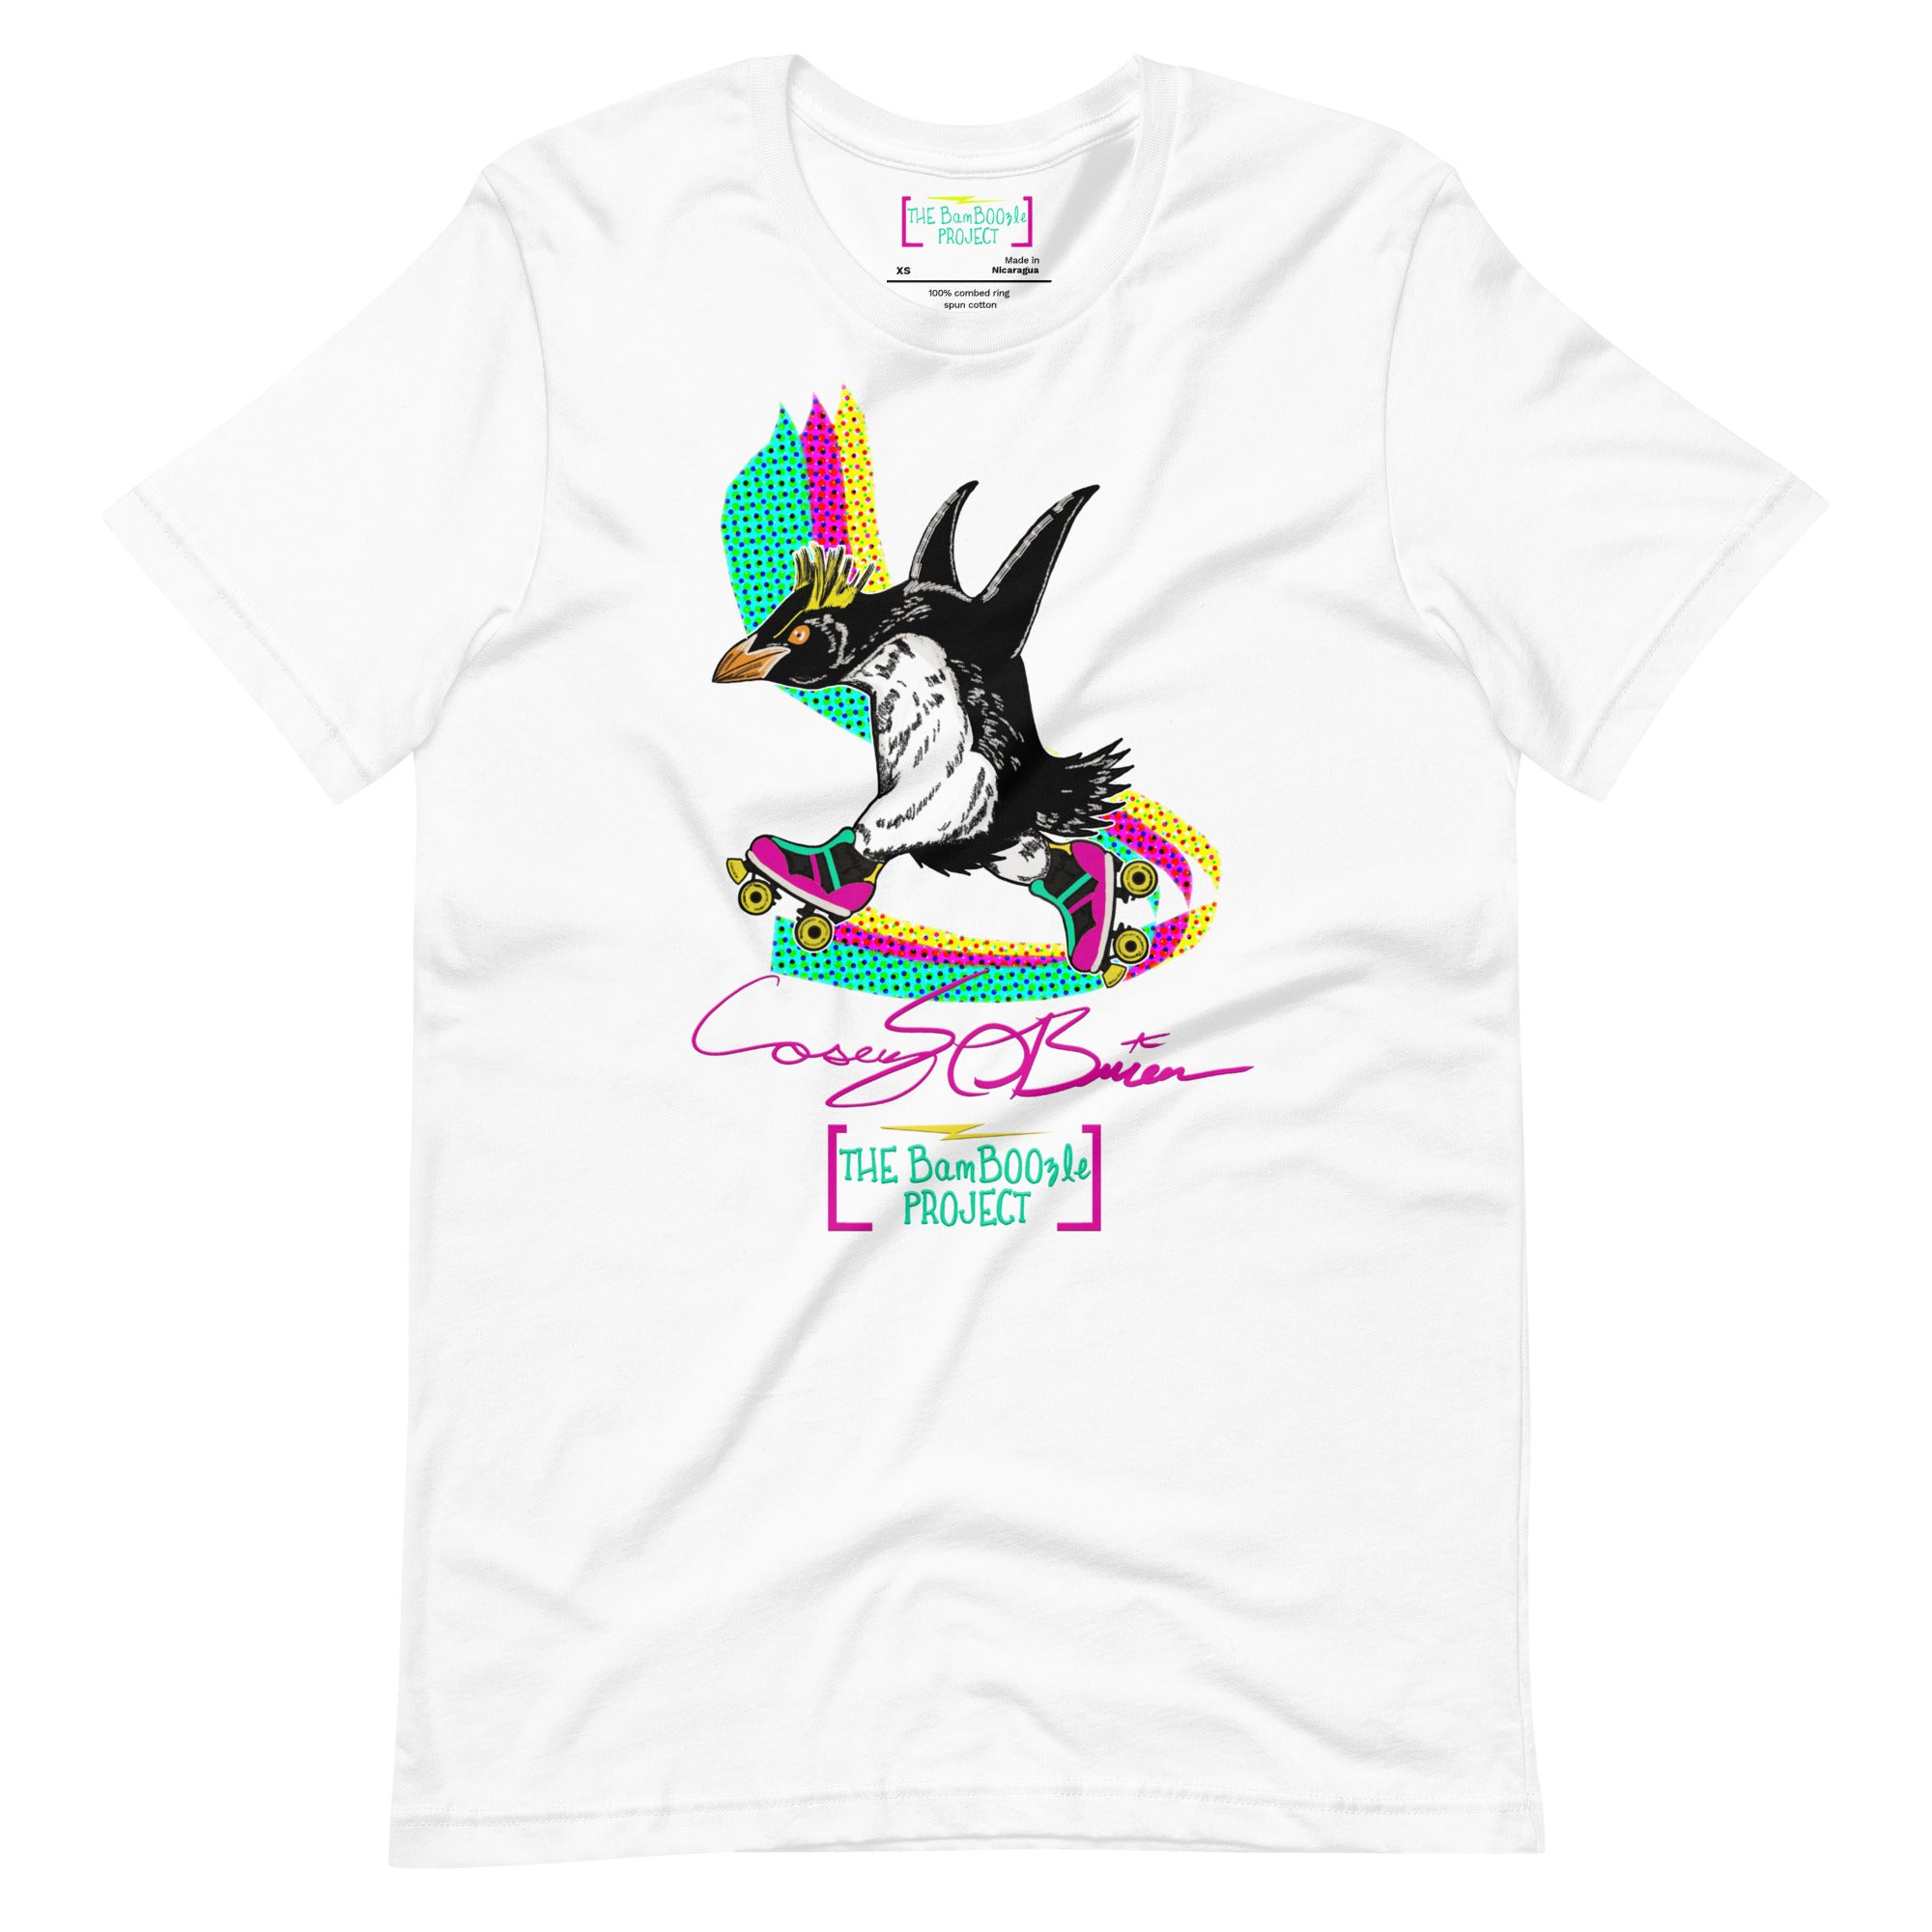 Air Penguin Casey O'Brien Unisex T-shirt